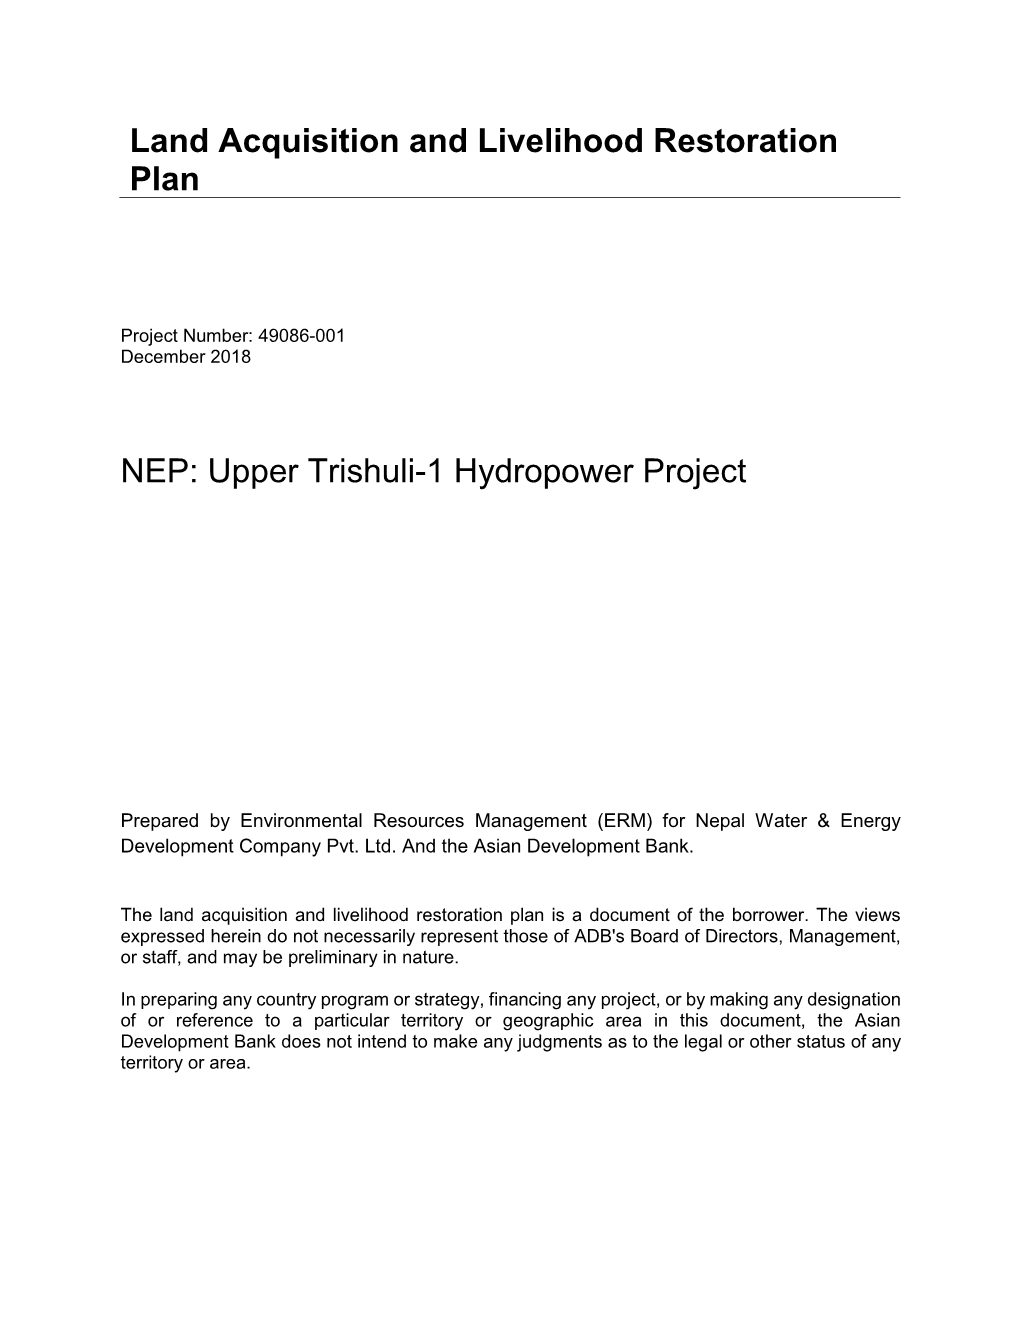 49086-001: Upper Trishuli-1 Hydropower Project